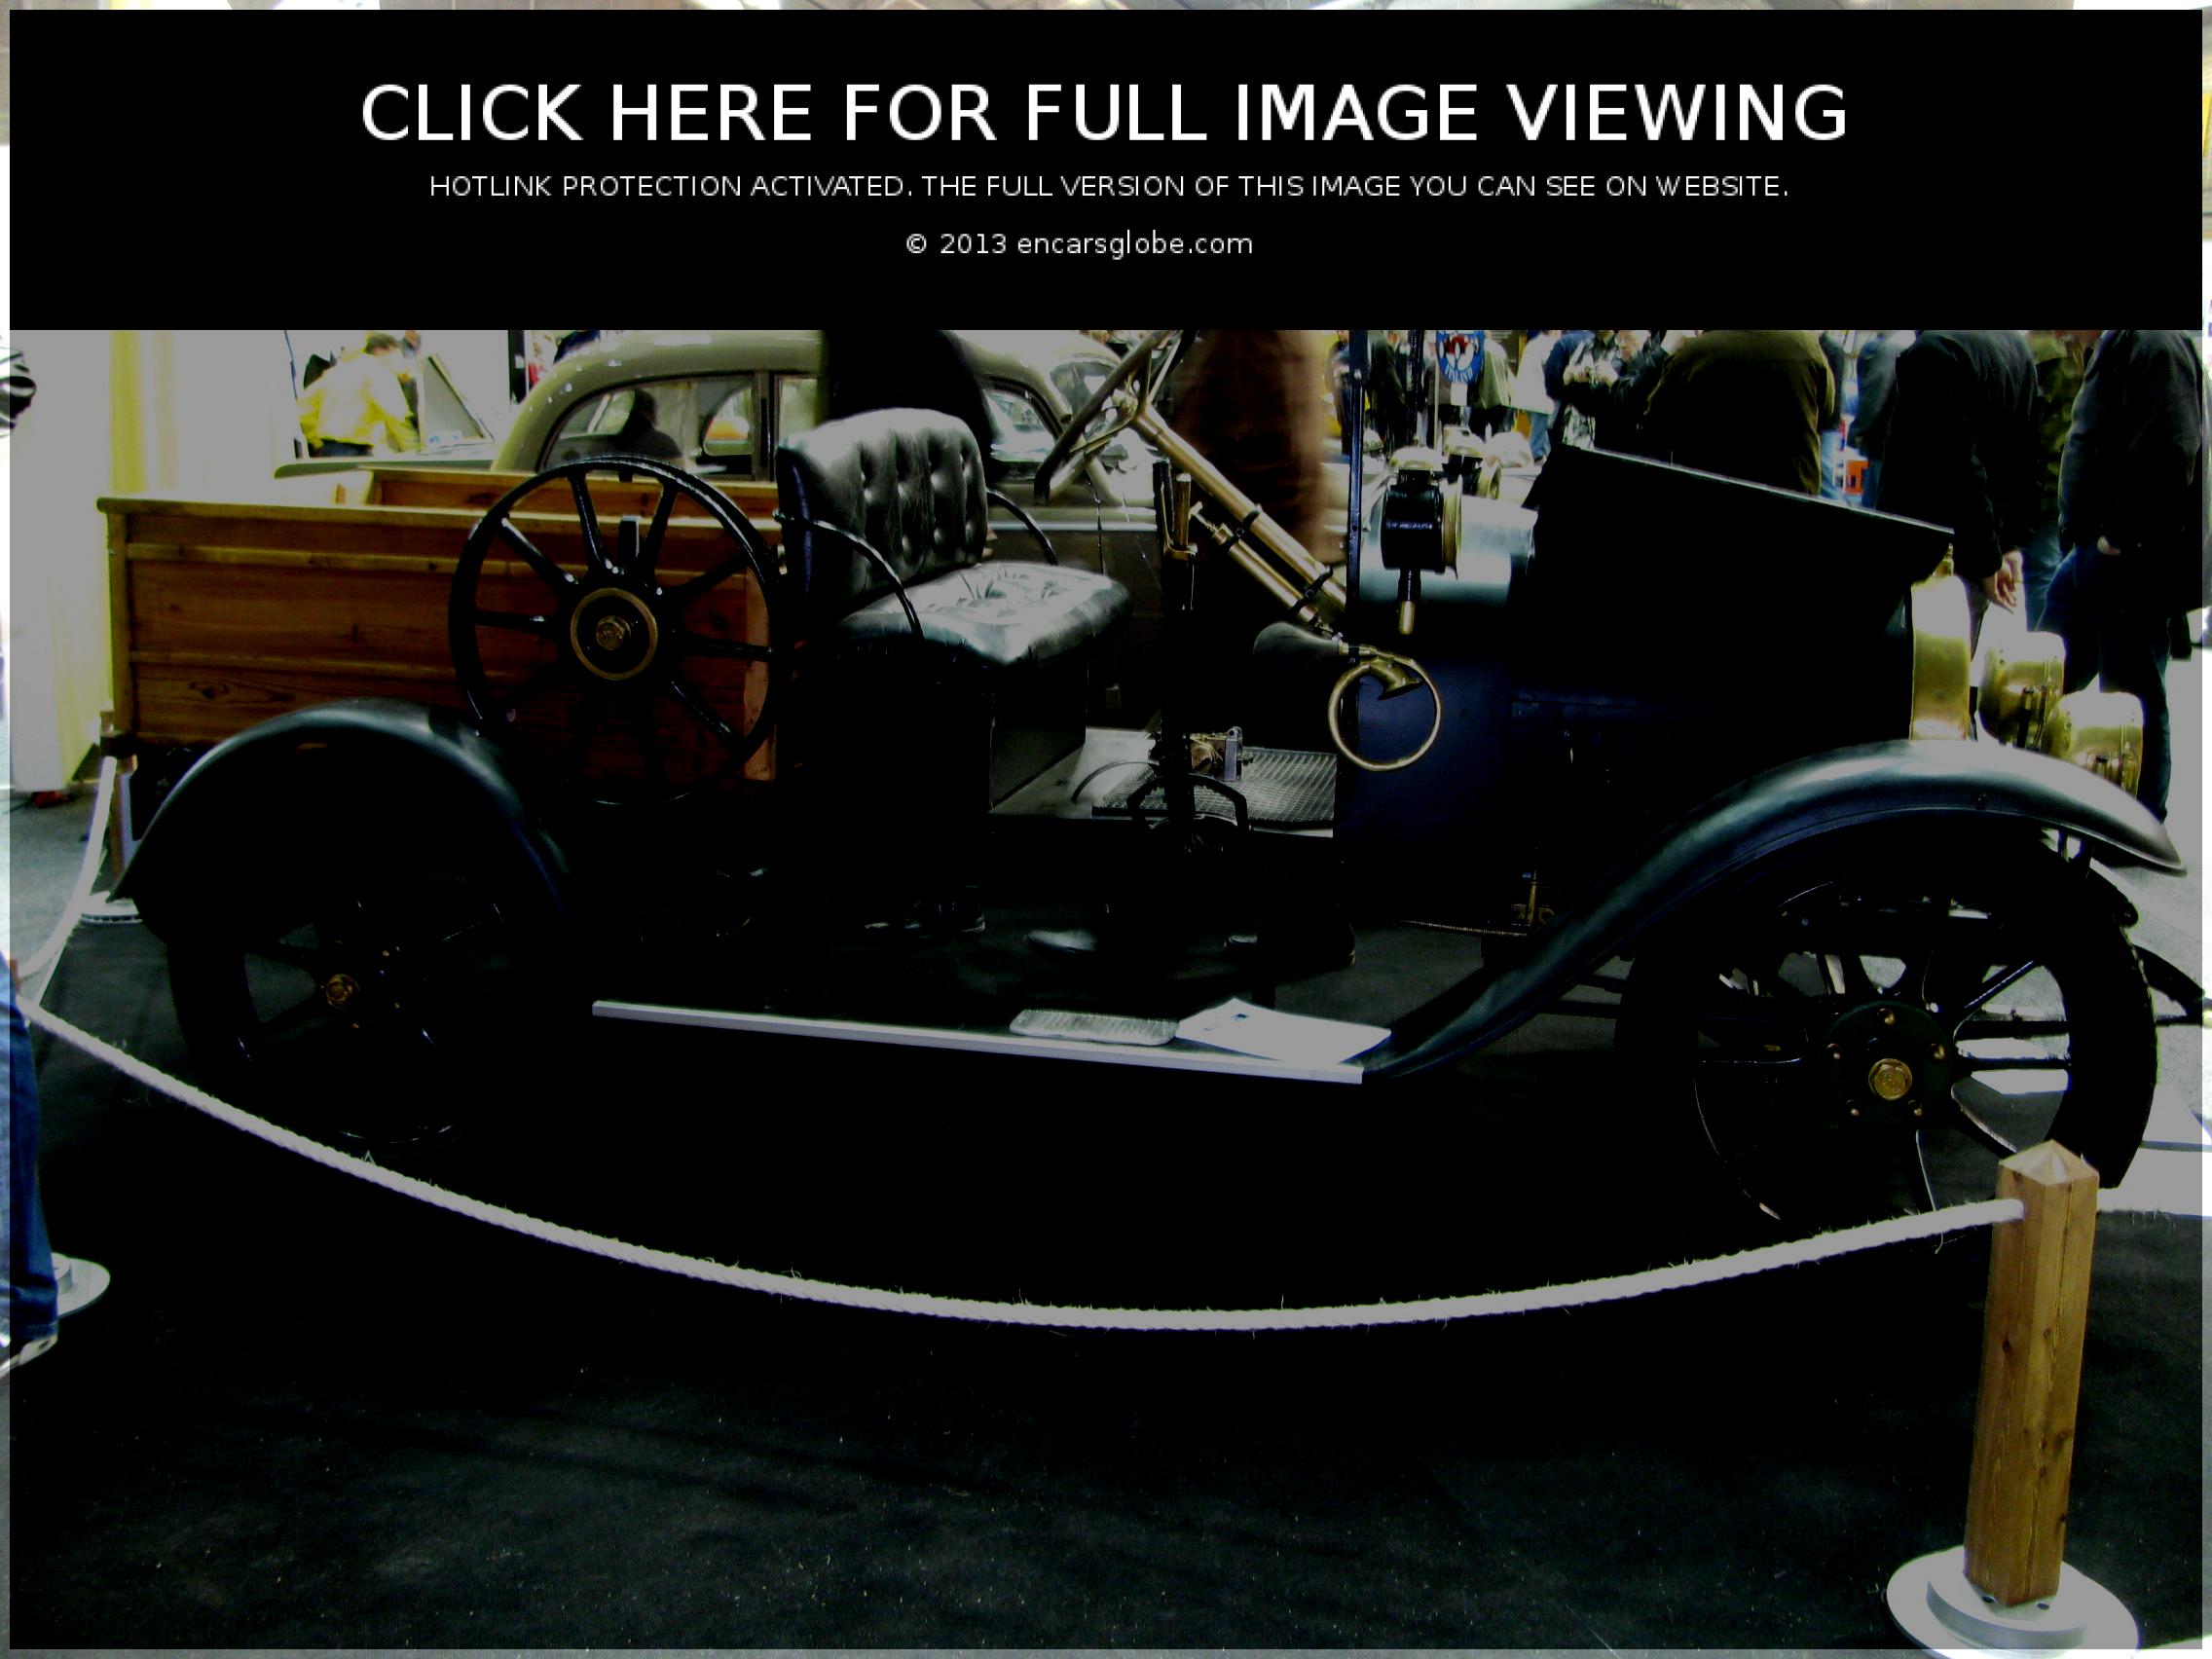 Opel 6/16 PS Image â„–: 01 image. Size: 2272 x 1704 px | 37600 views